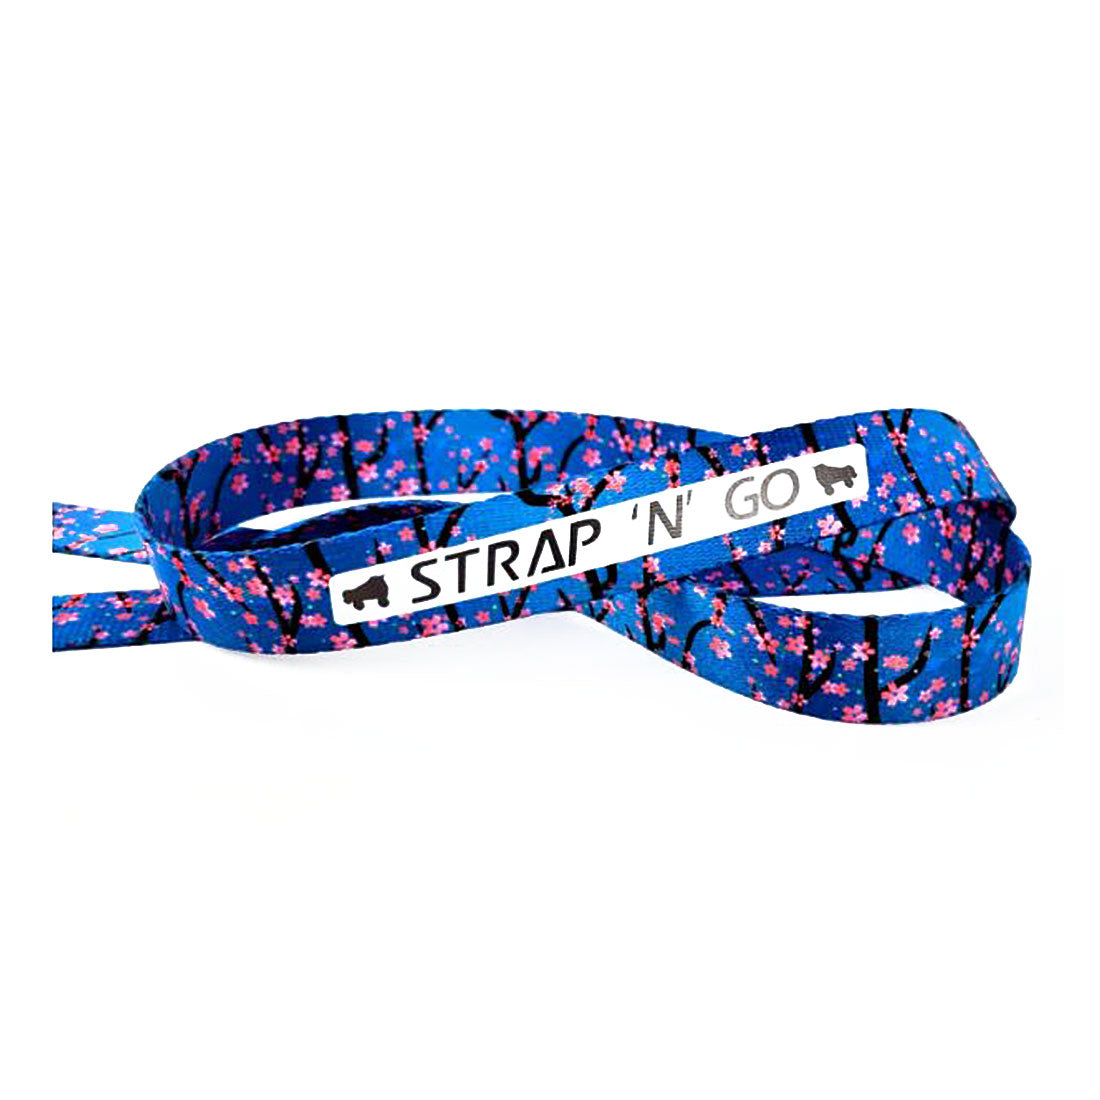 Strap N Go Skate Noose/Leash - Patterns Cherry Blossom Roller Skate Accessories